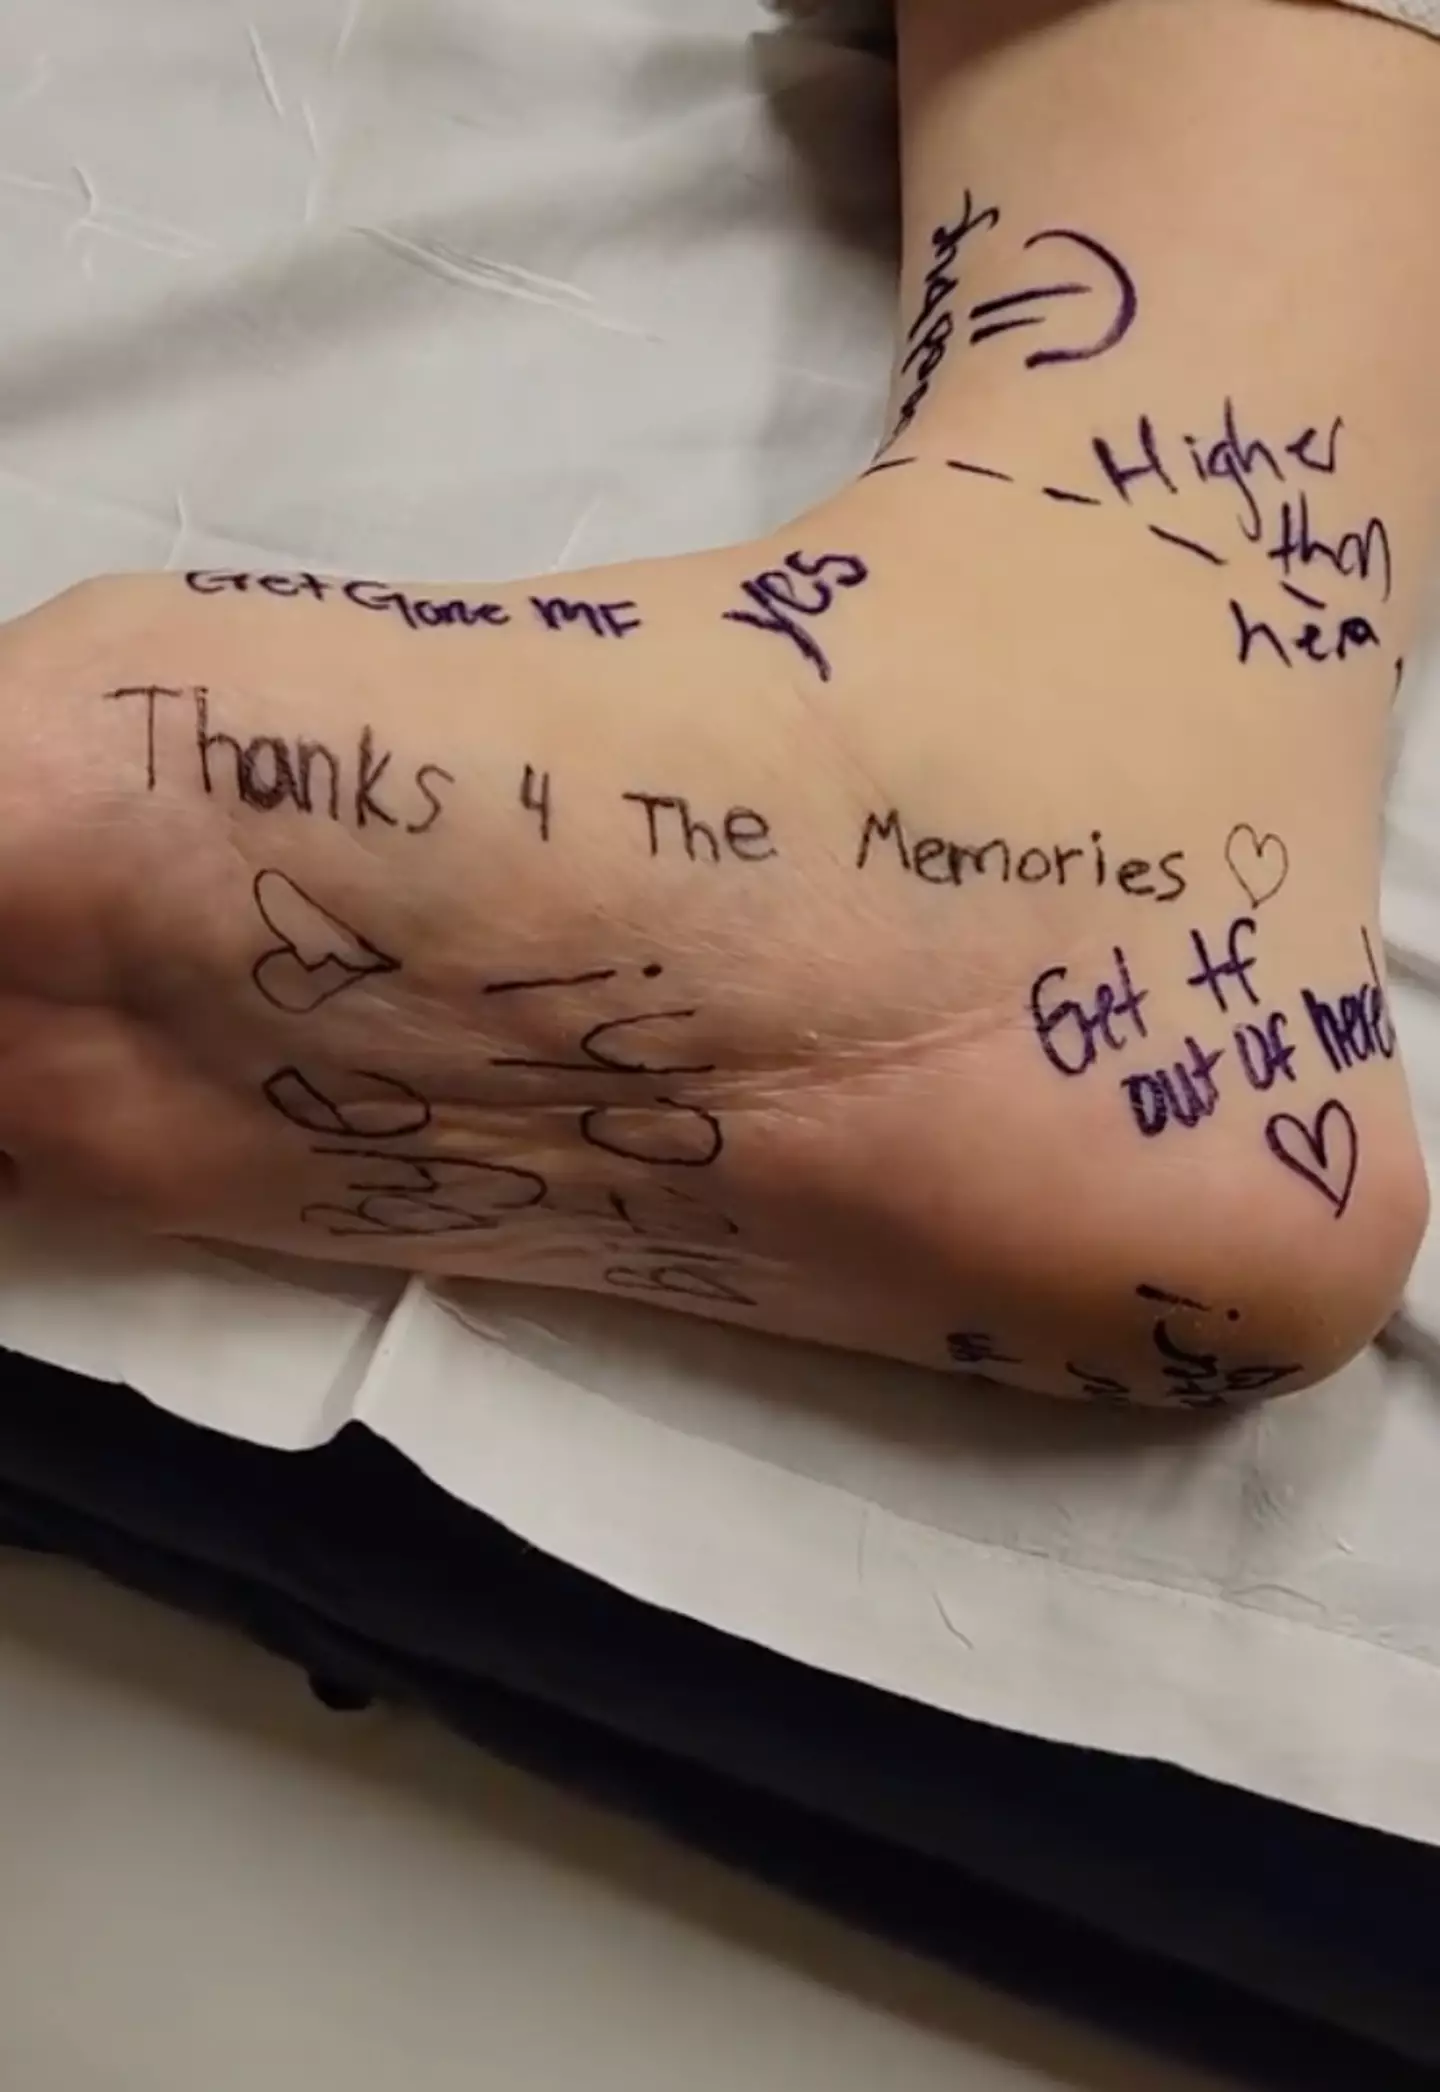 People wrote messages on Sierra's foot.